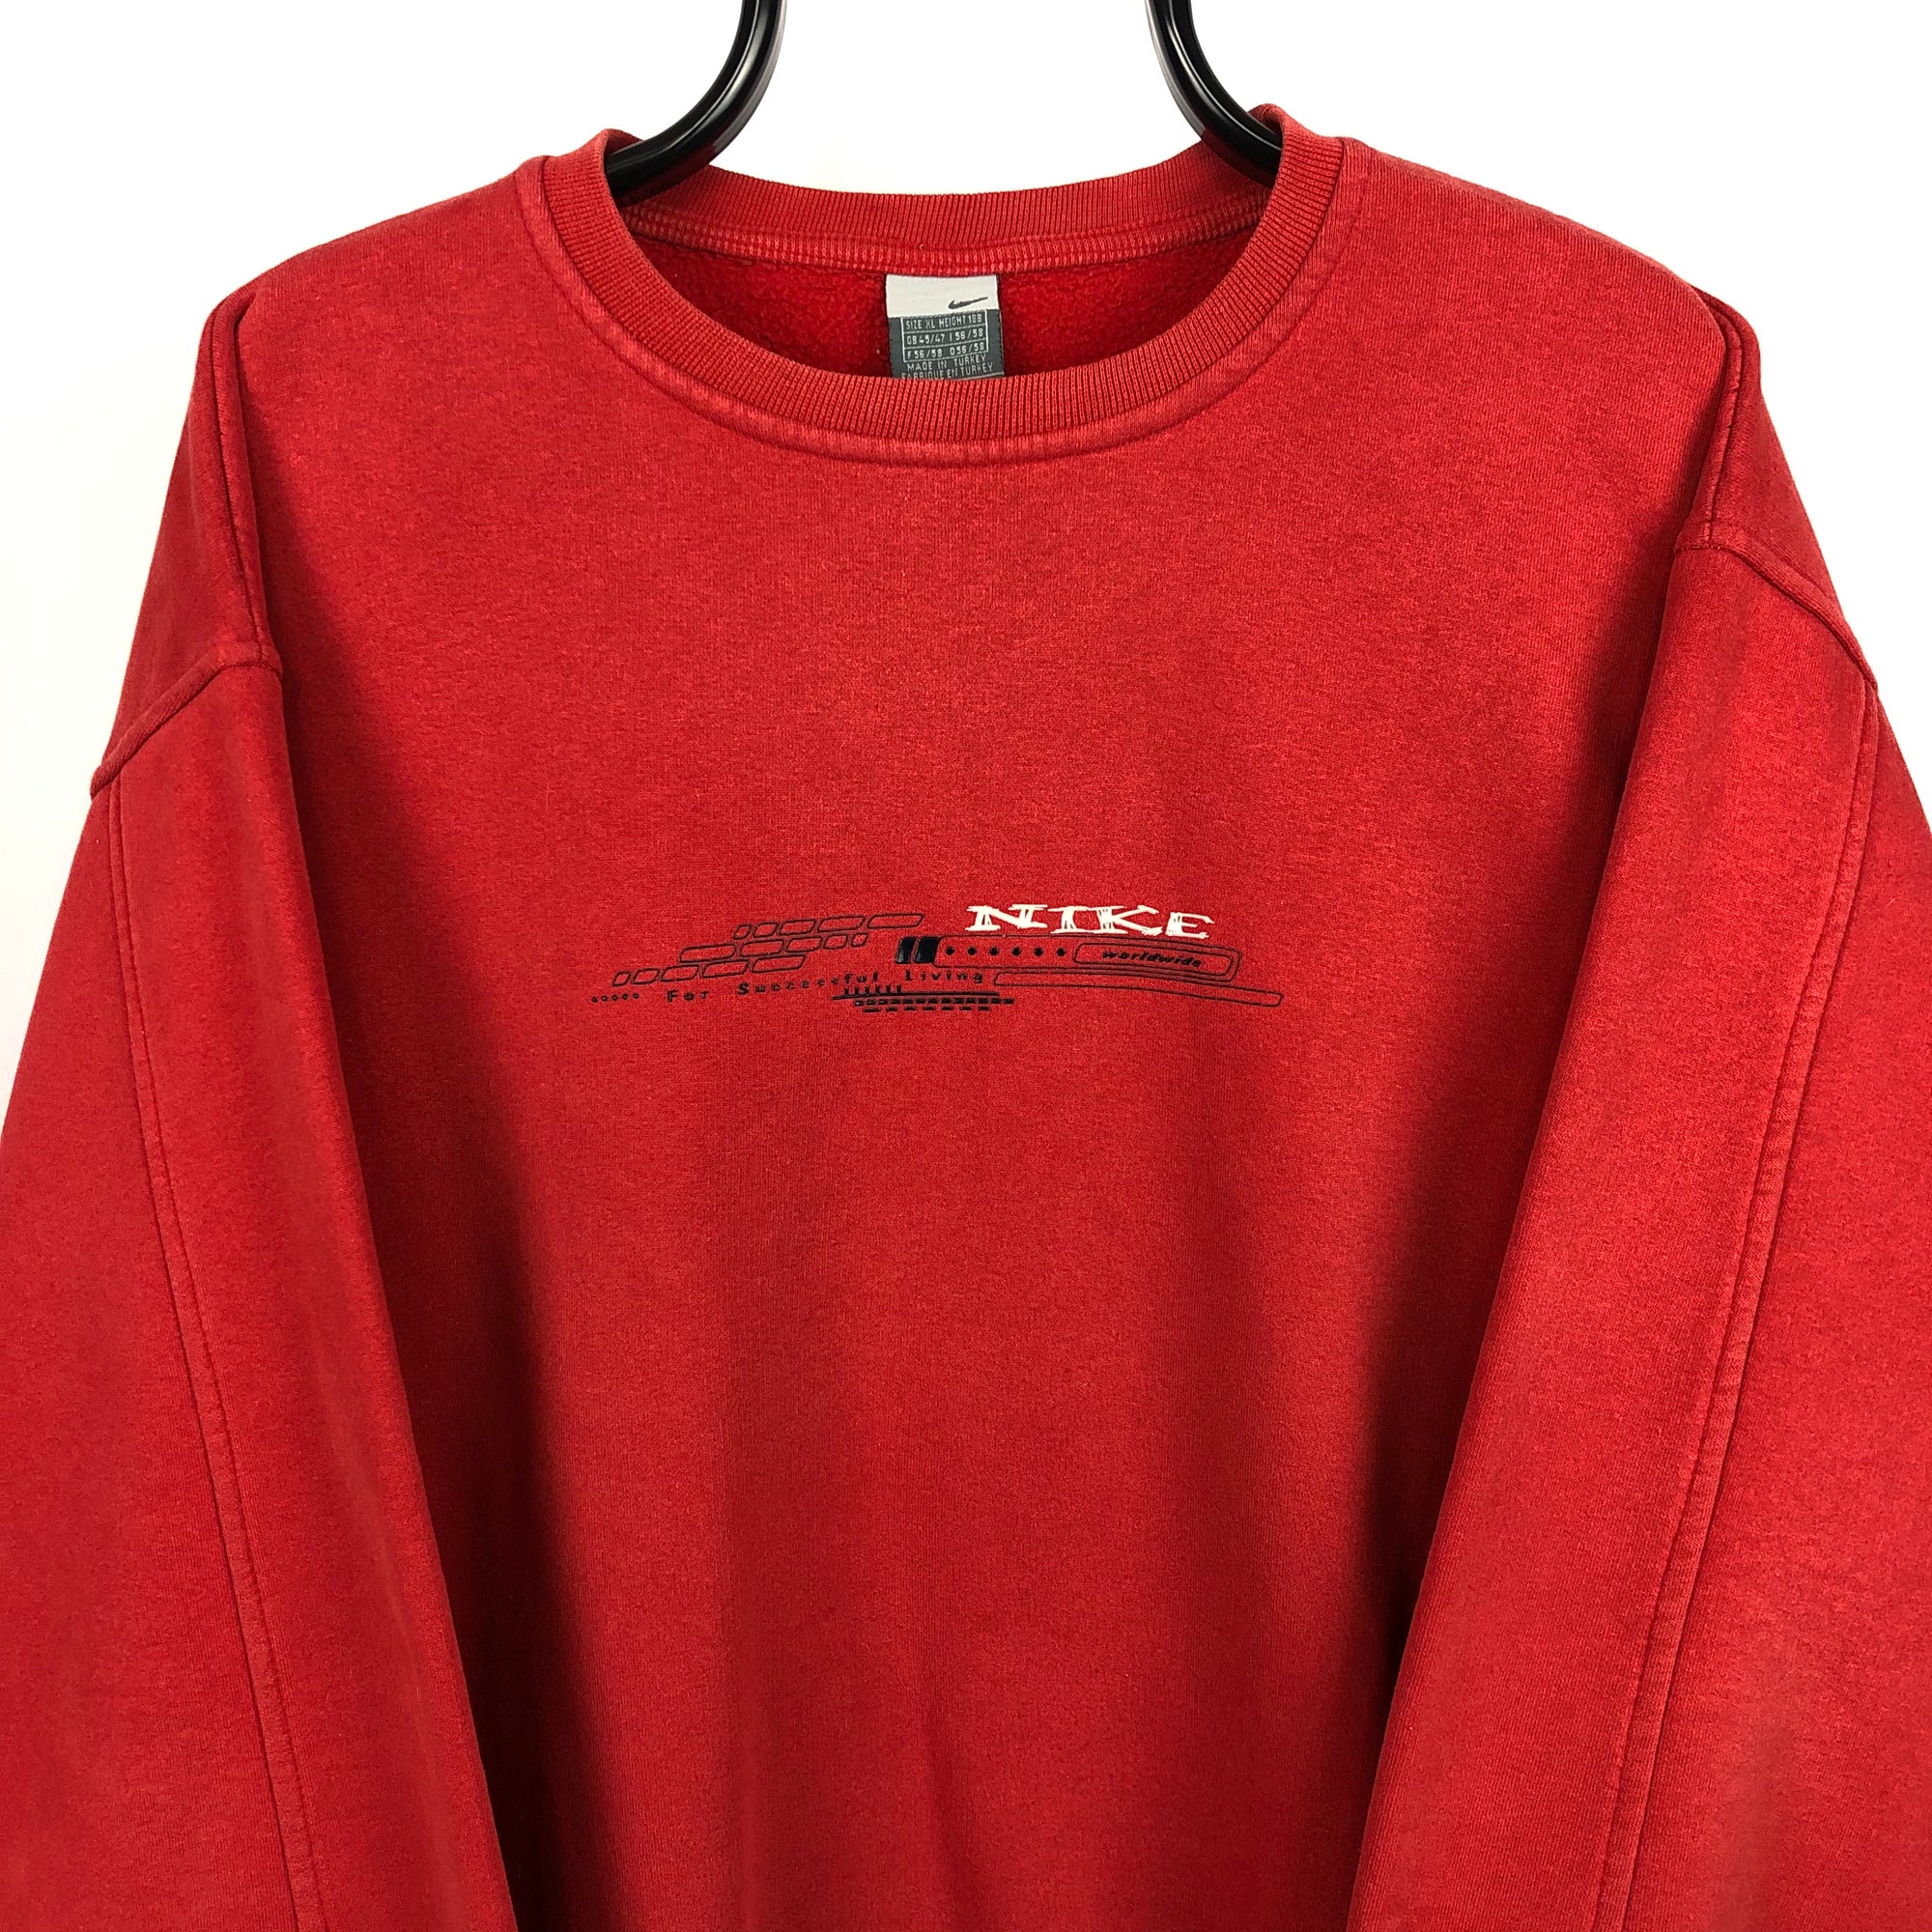 Vintage Nike Graffiti Spellout Sweatshirt in Red - Men's Large/Women's XL